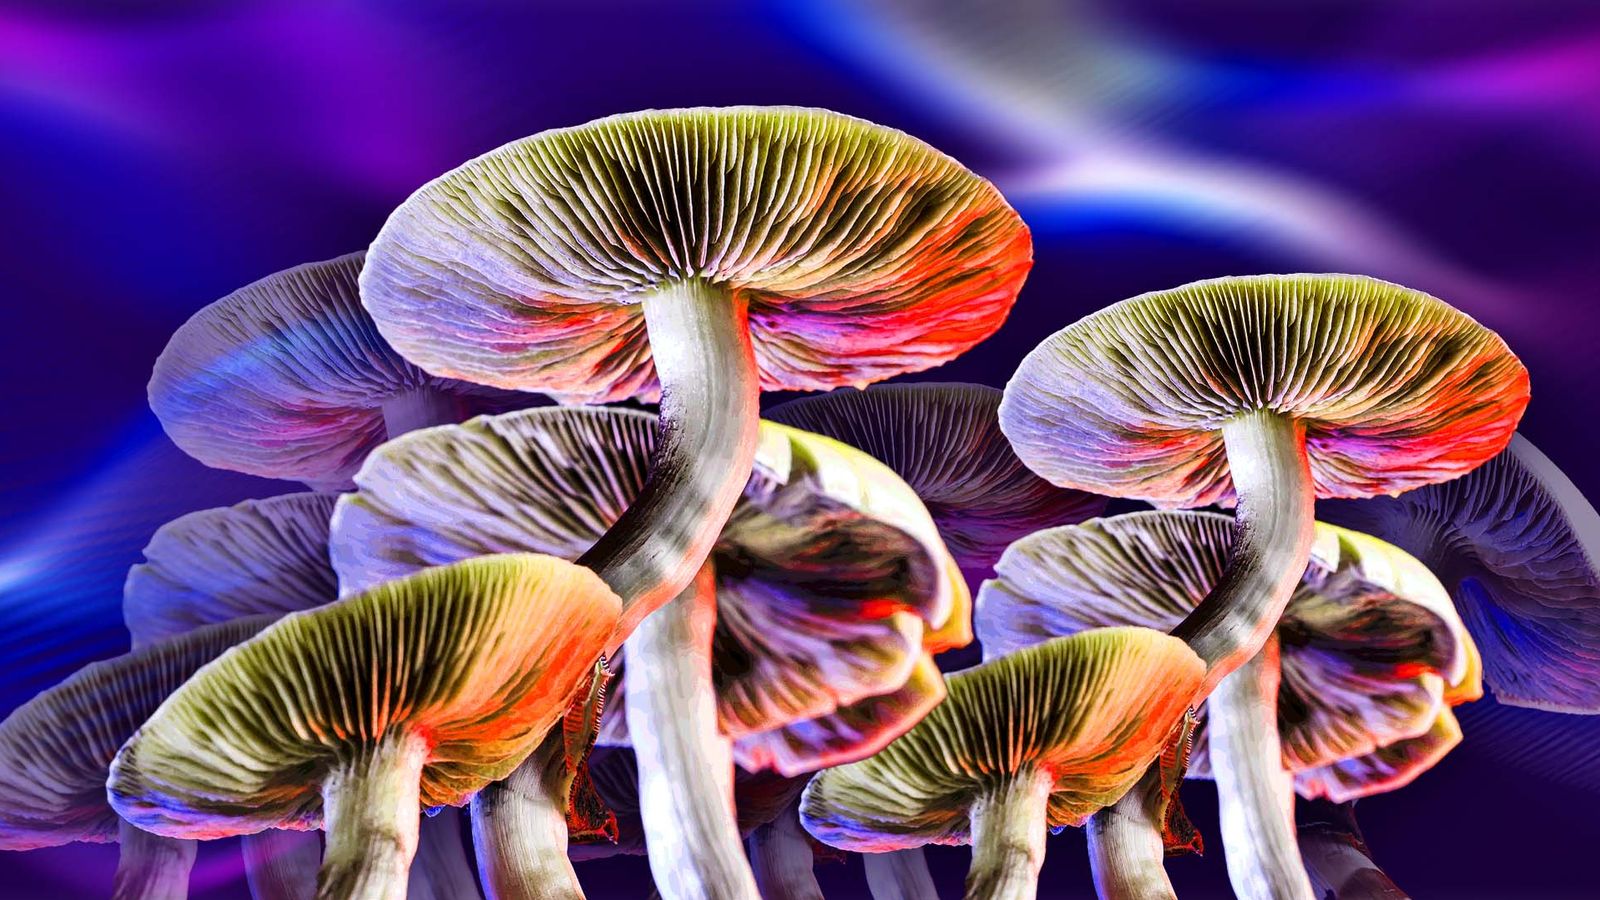 magic mushrooms effective for treating depression - study